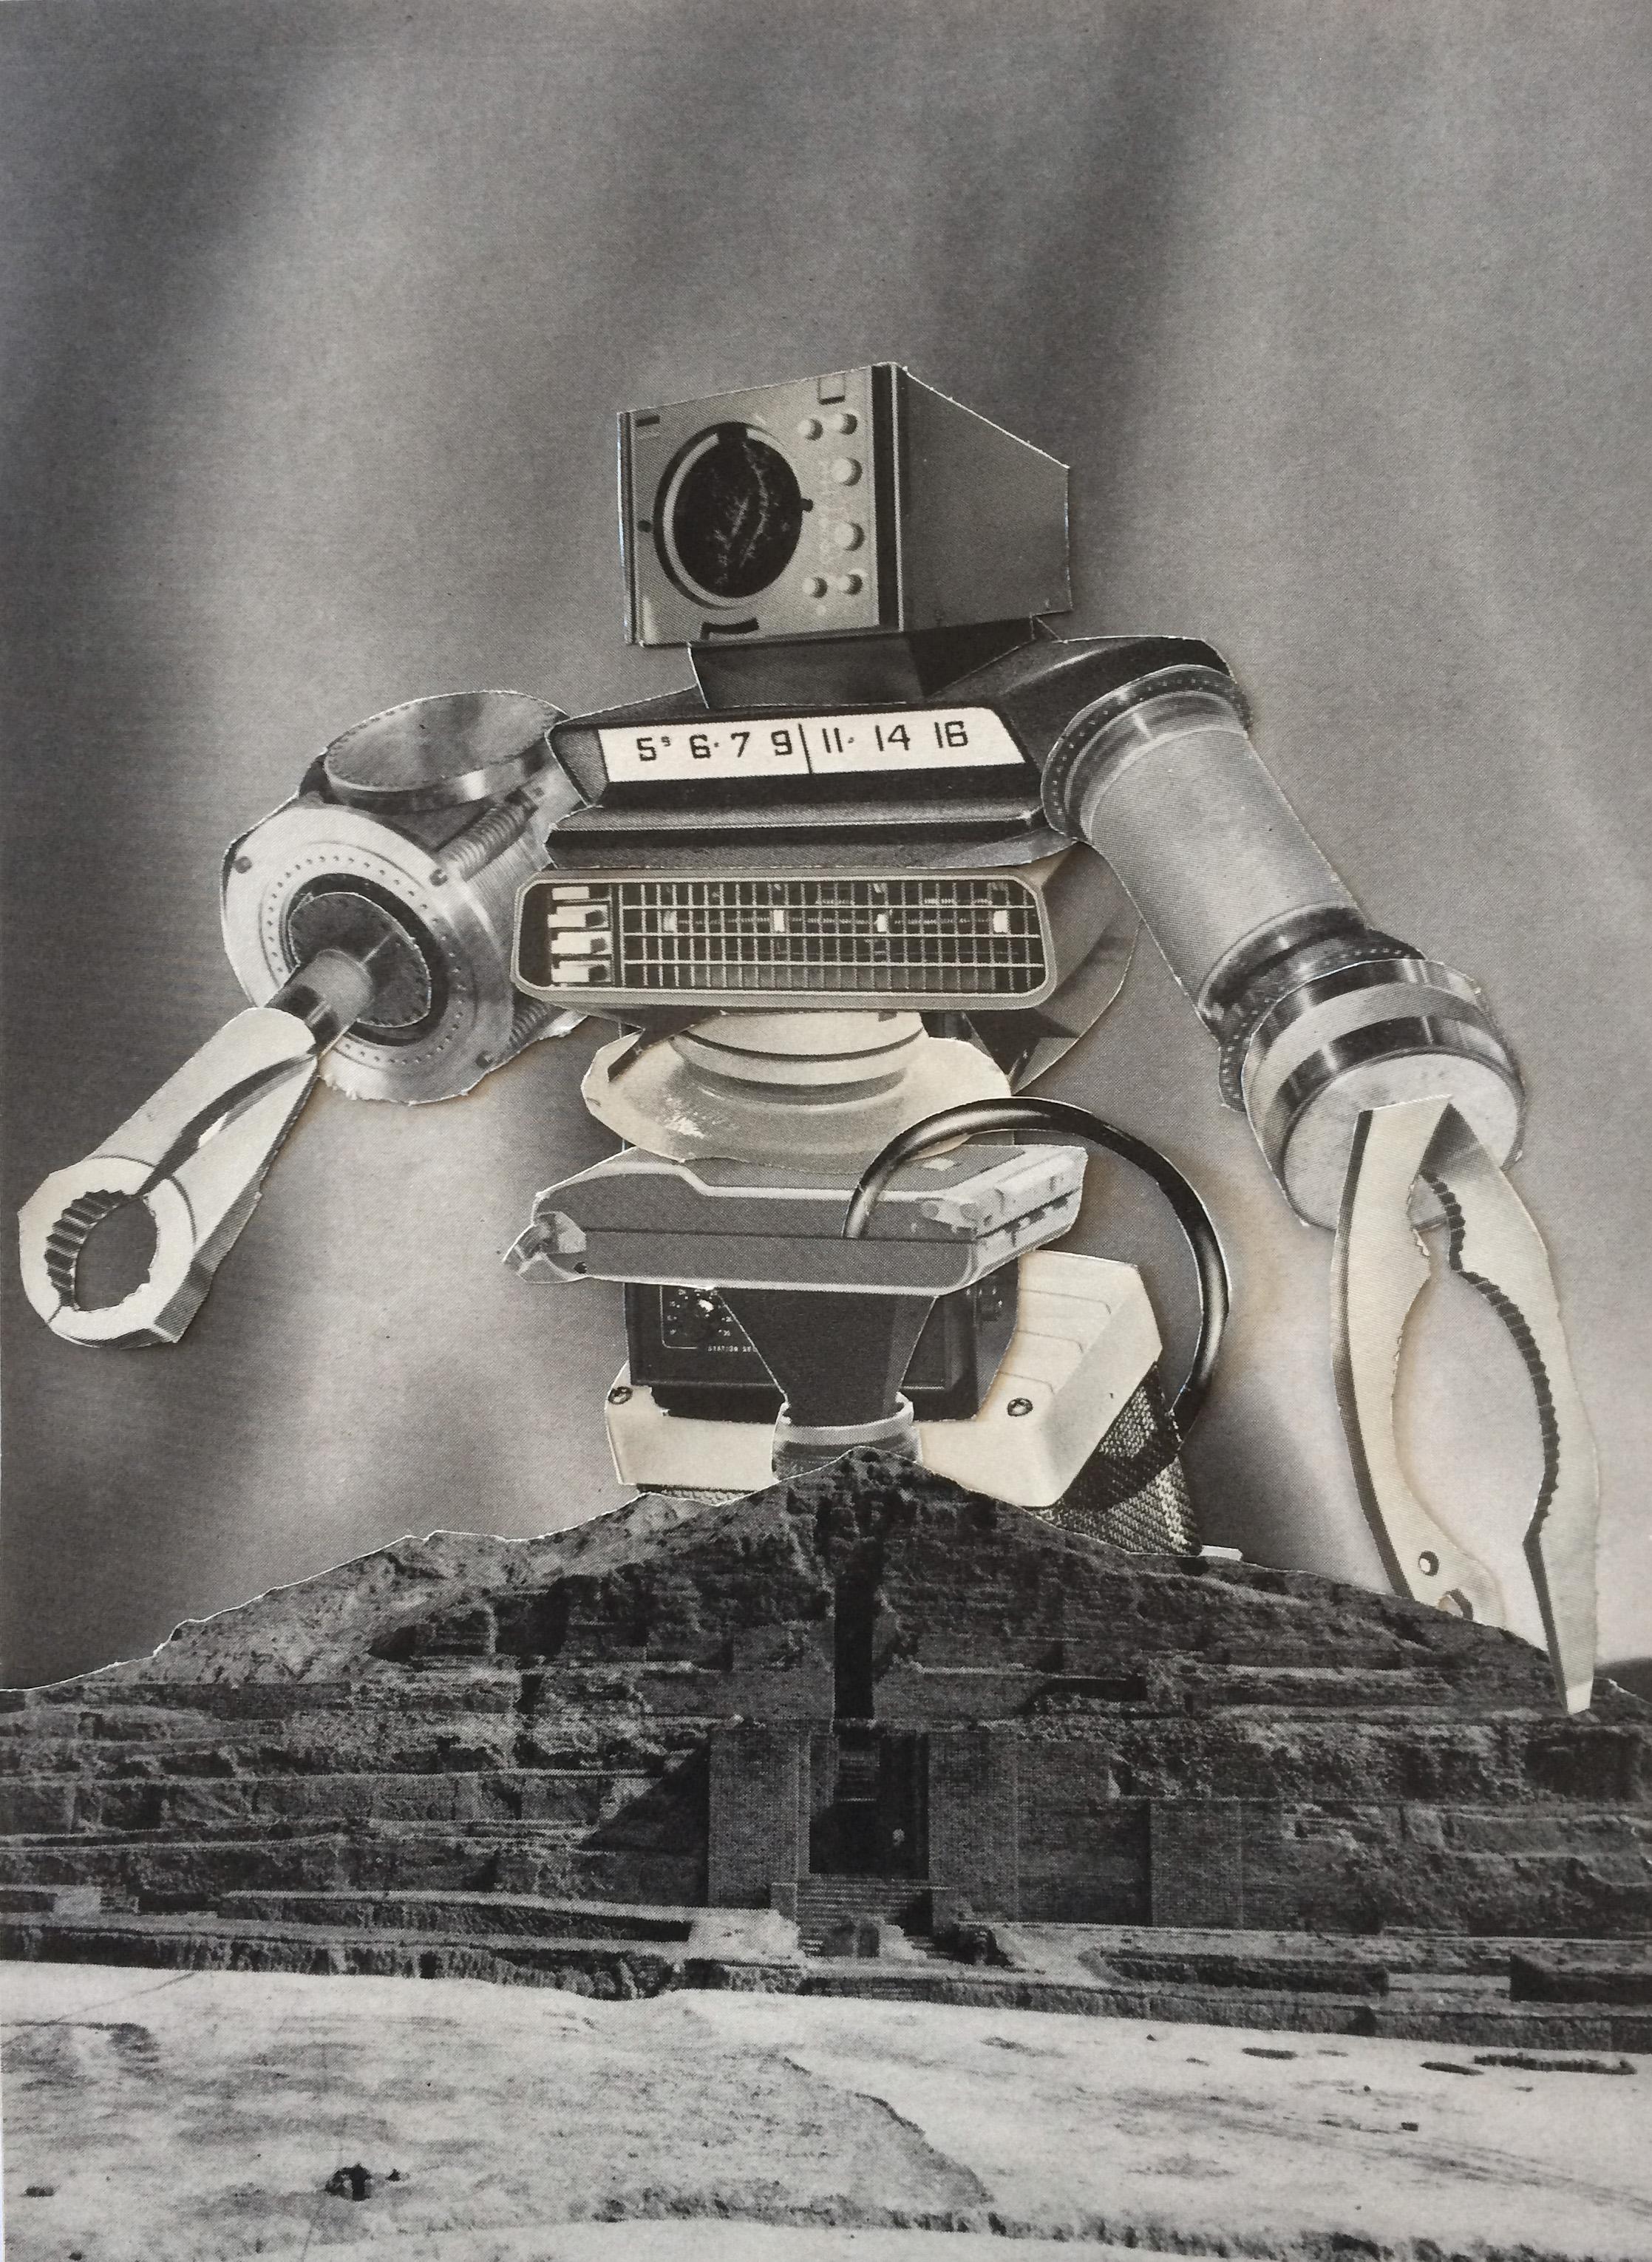 Restoration Robot - Art by Joseph Karwacki